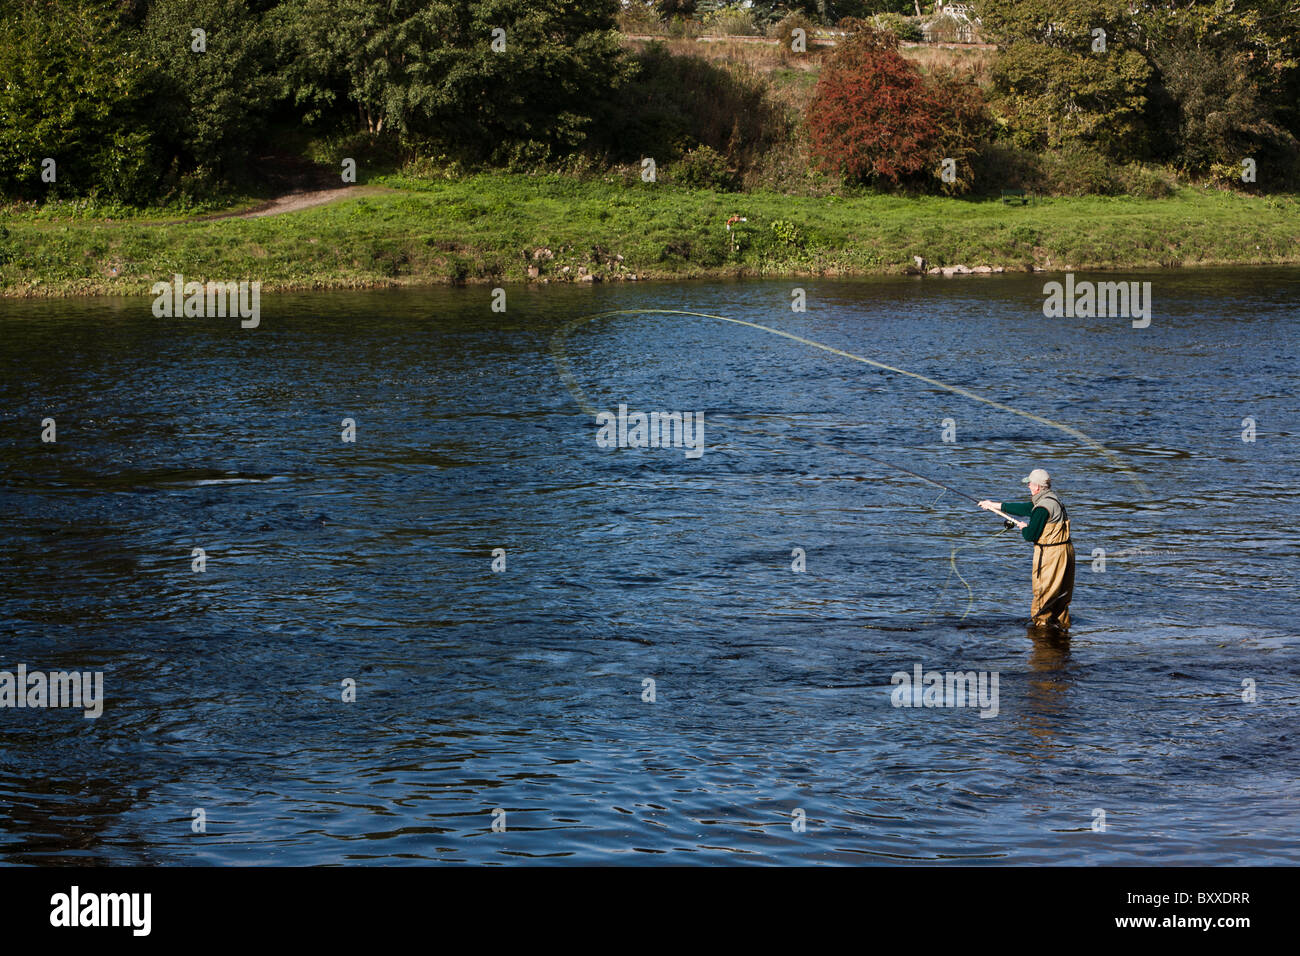 https://c8.alamy.com/comp/BXXDRR/a-man-salmon-fishing-on-a-scottish-river-the-fishing-line-can-be-seen-BXXDRR.jpg